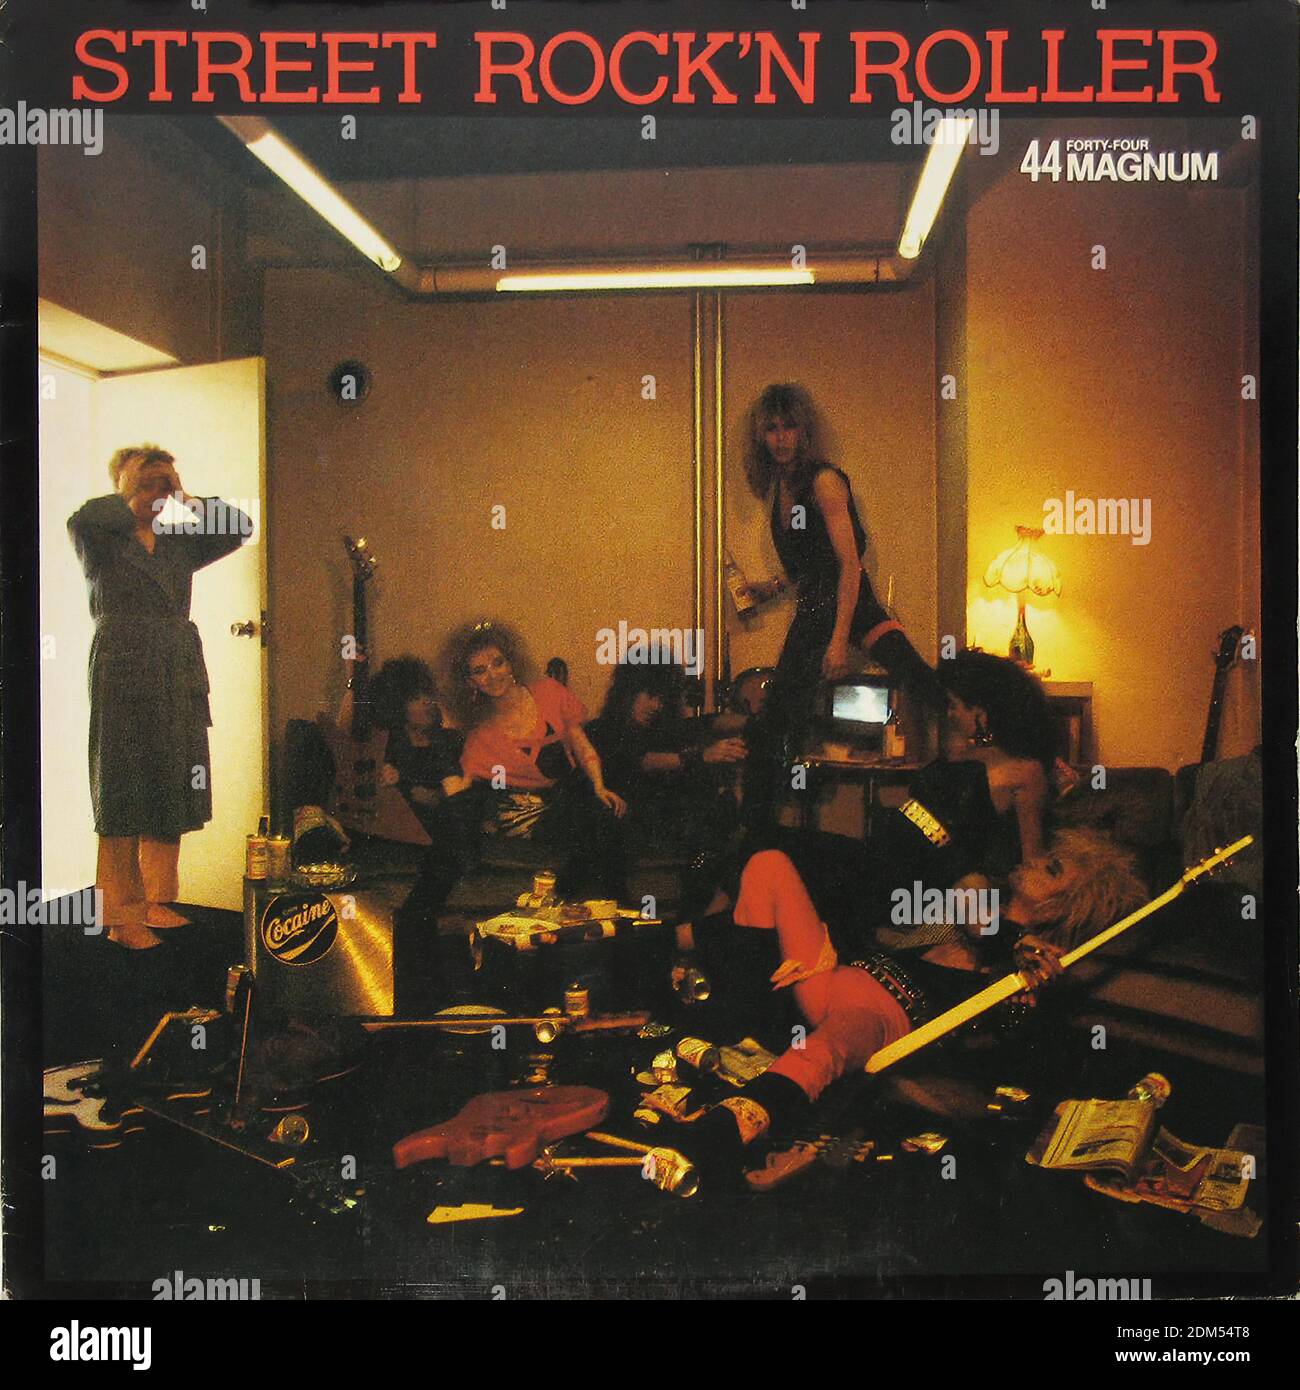 44 MAGNUM STREET ROCK 'N ROLLER + INSERTO PROMOZIONALE - Copertina Vintage Vinyl Record Foto Stock